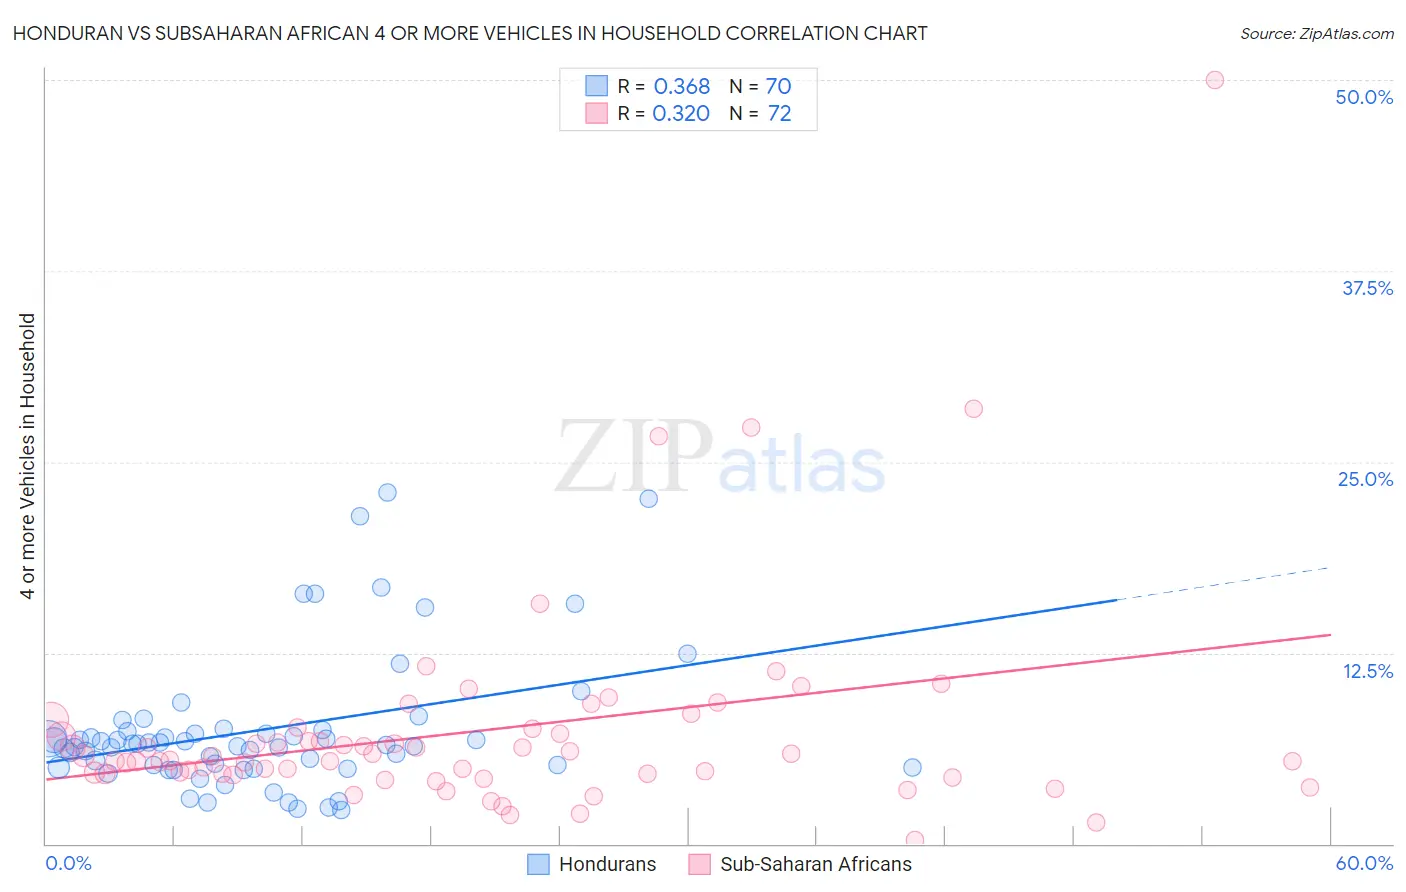 Honduran vs Subsaharan African 4 or more Vehicles in Household